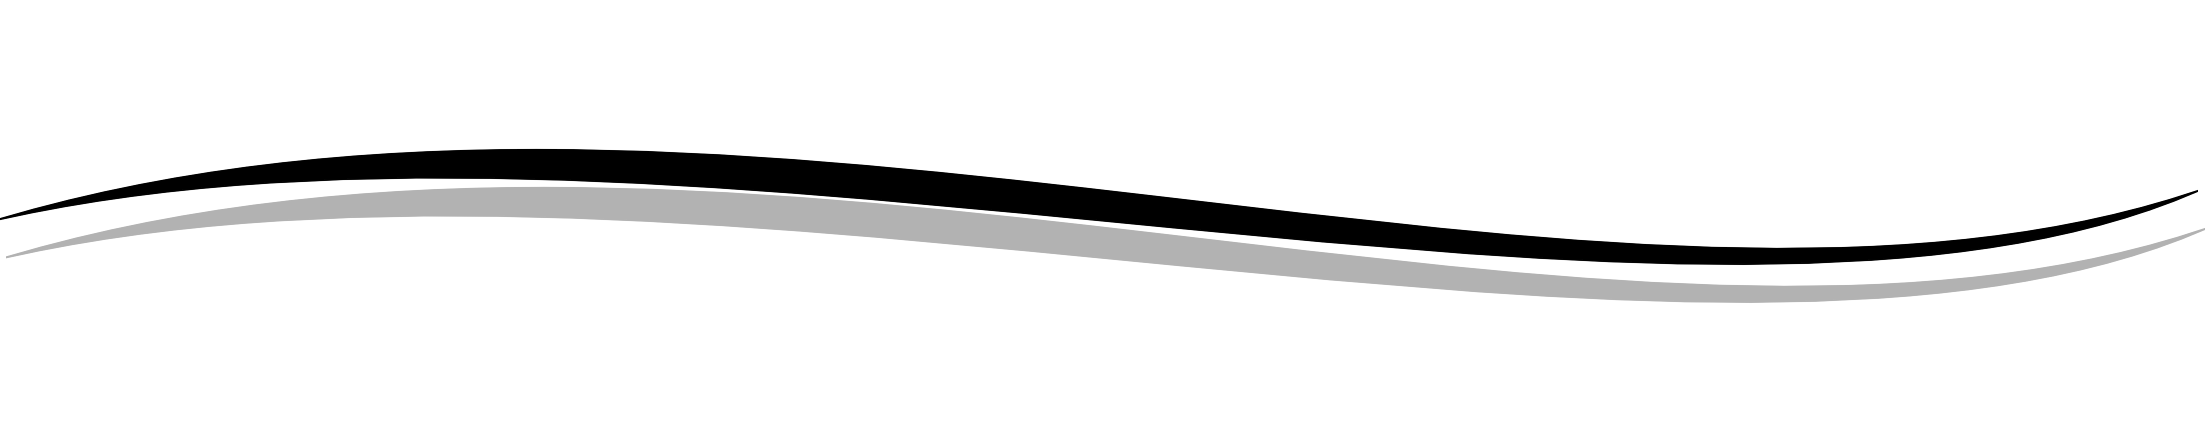 horizontal-line-clipart-2206.gif